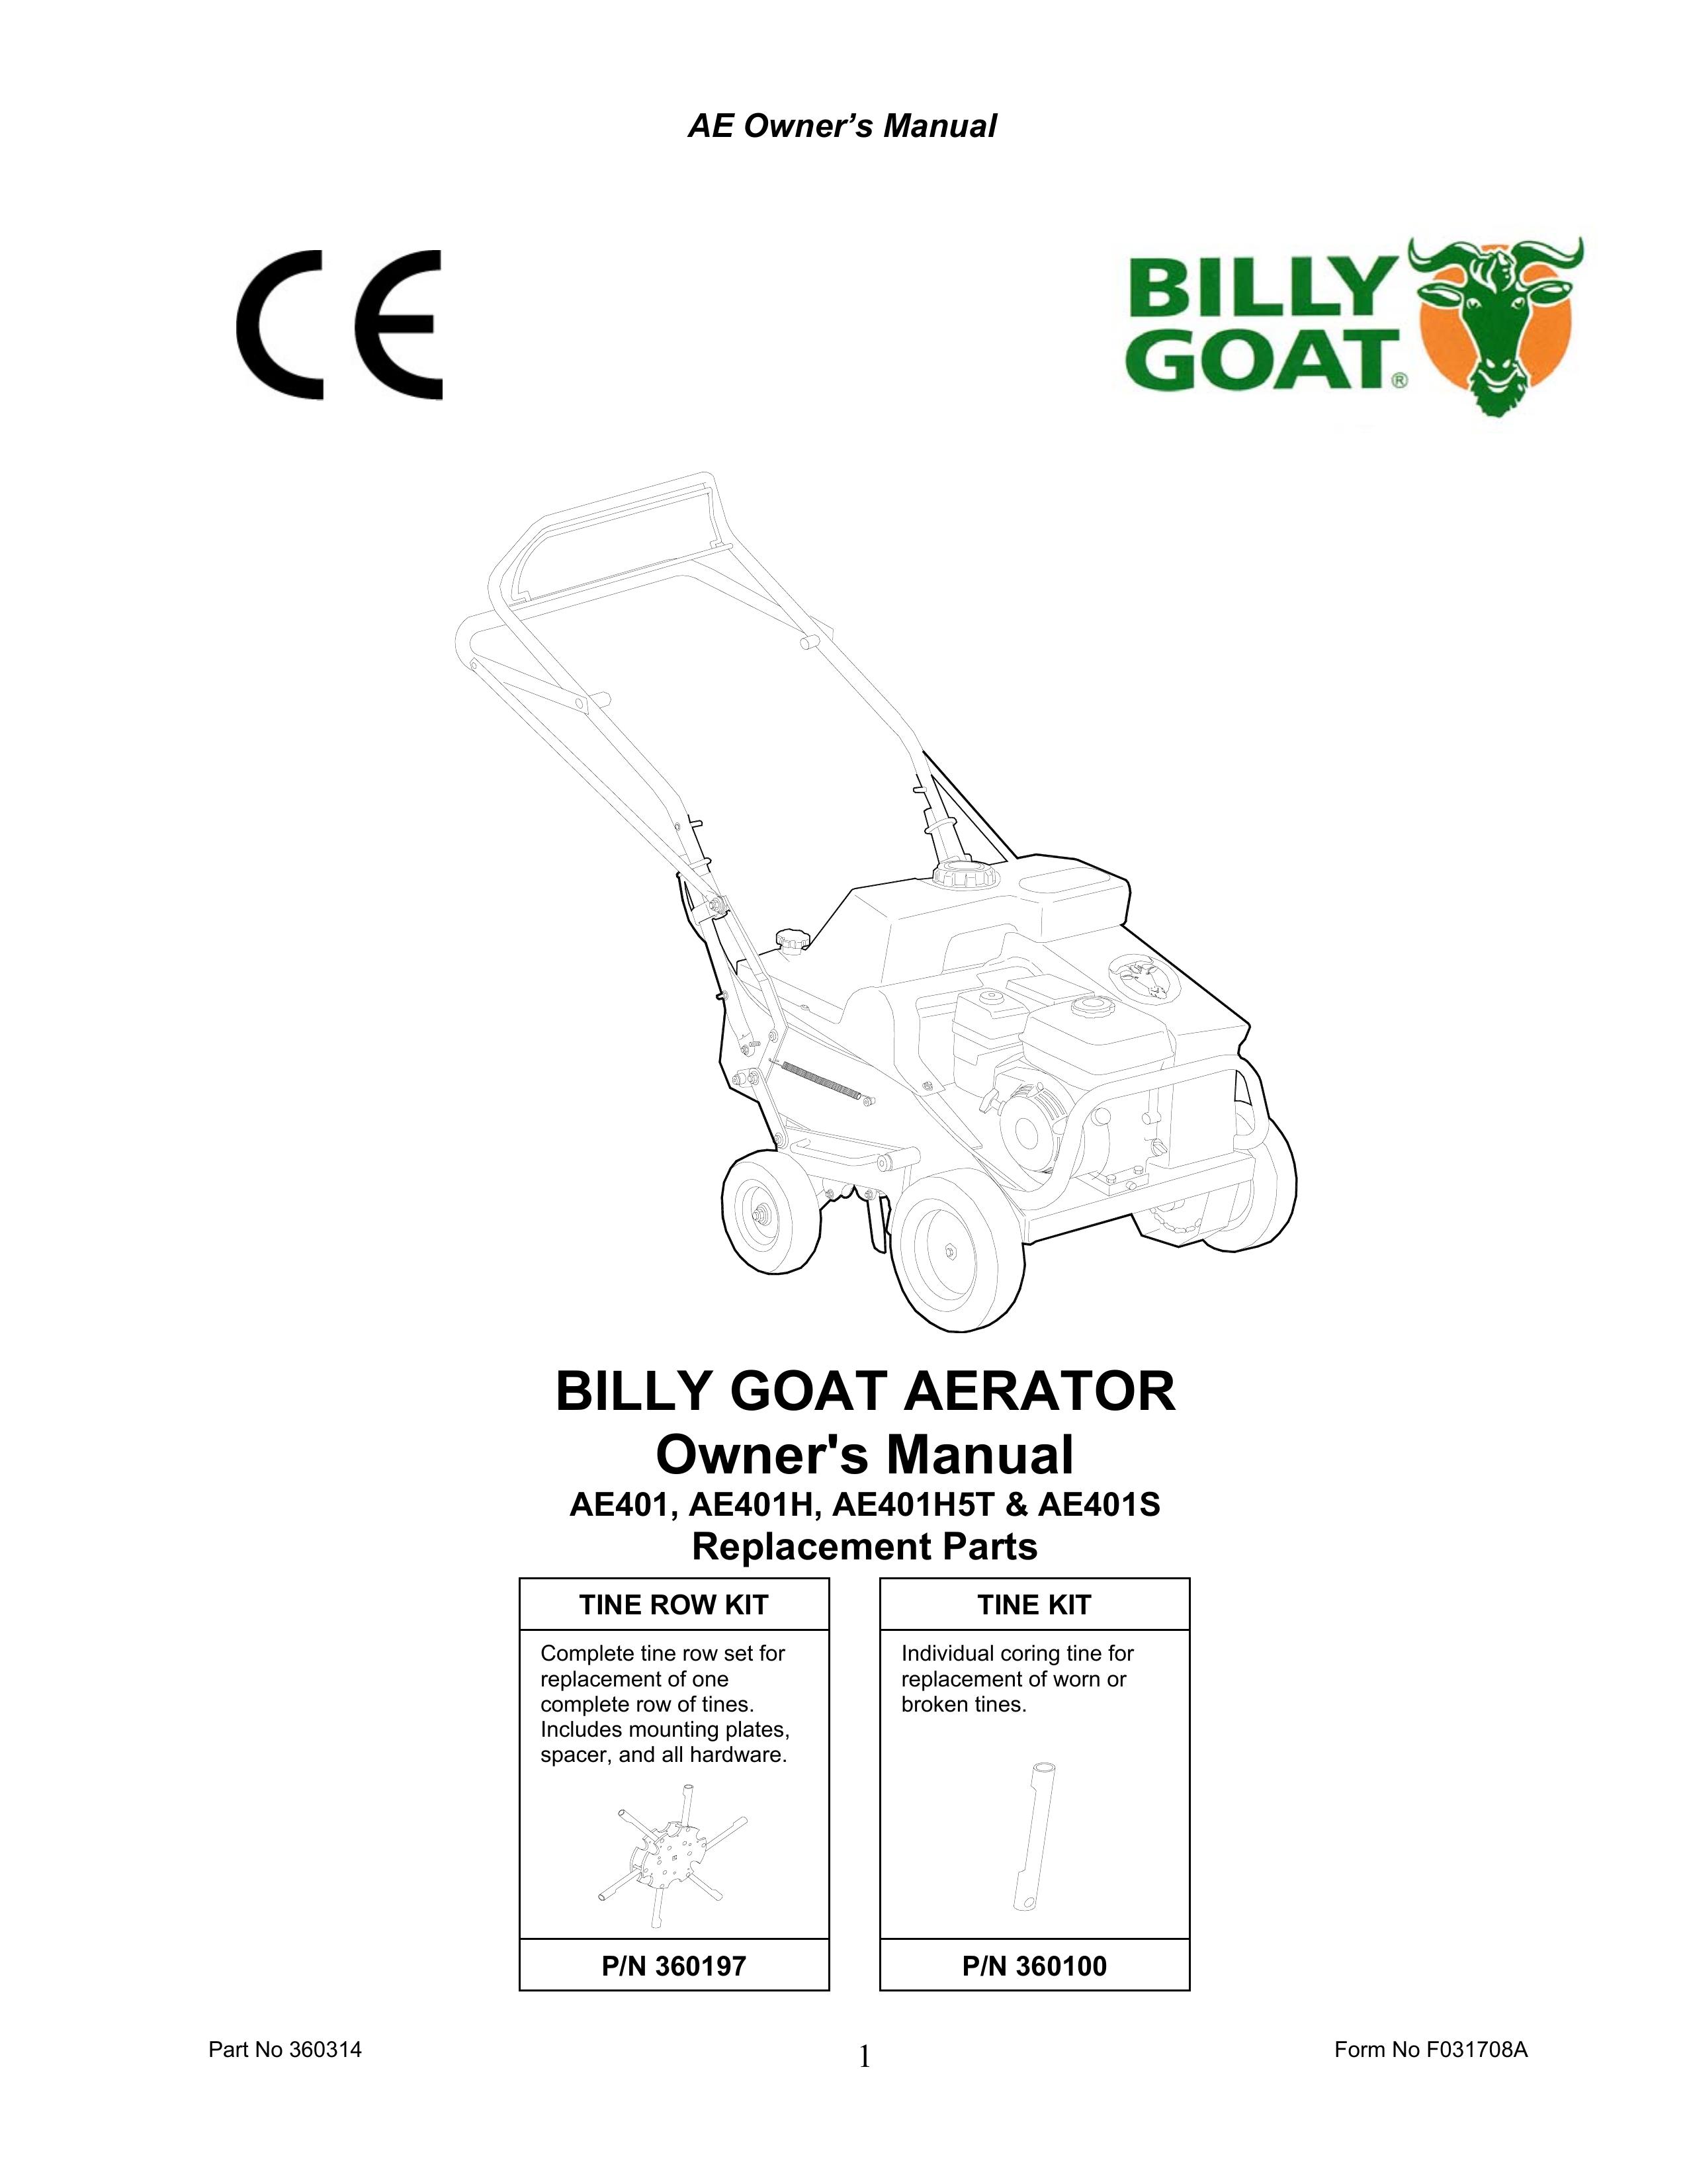 Billy Goat AE401HST Lawn Aerator User Manual